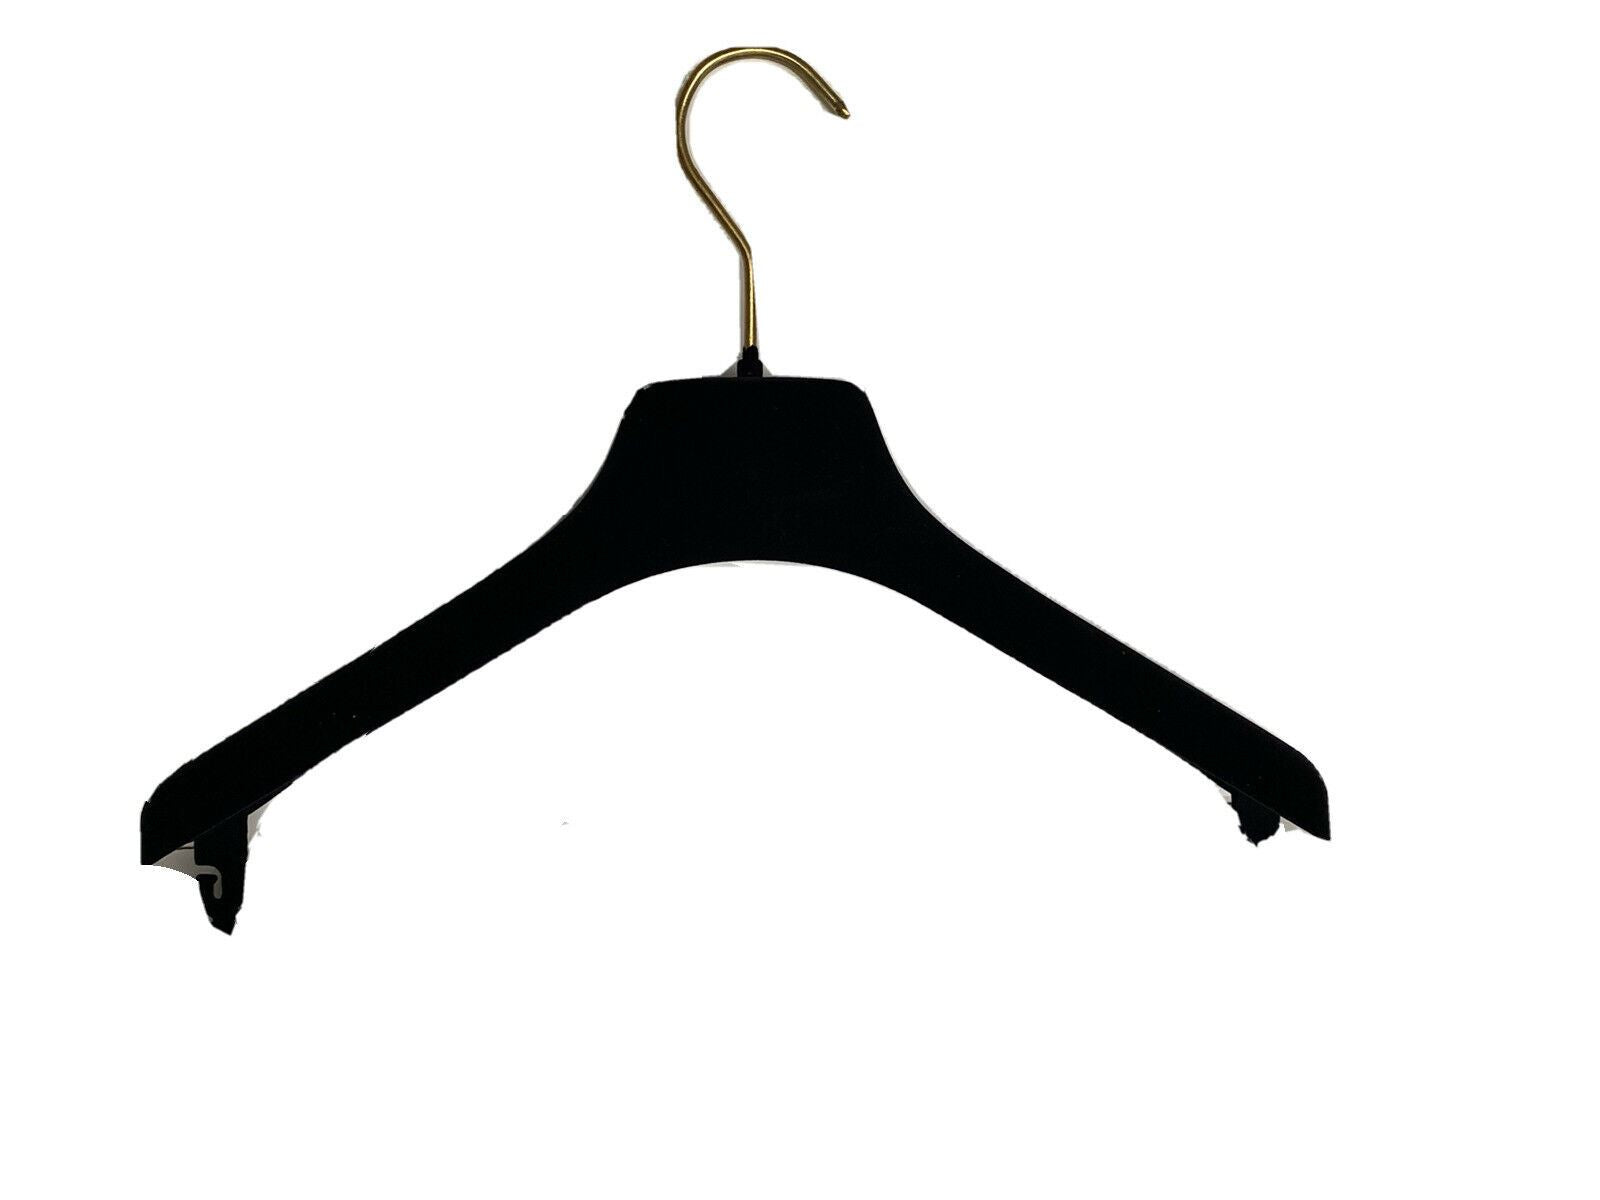 VERSACE Black Velvet Blazer Coat Sweater Dress Hangers with Gold Hardware